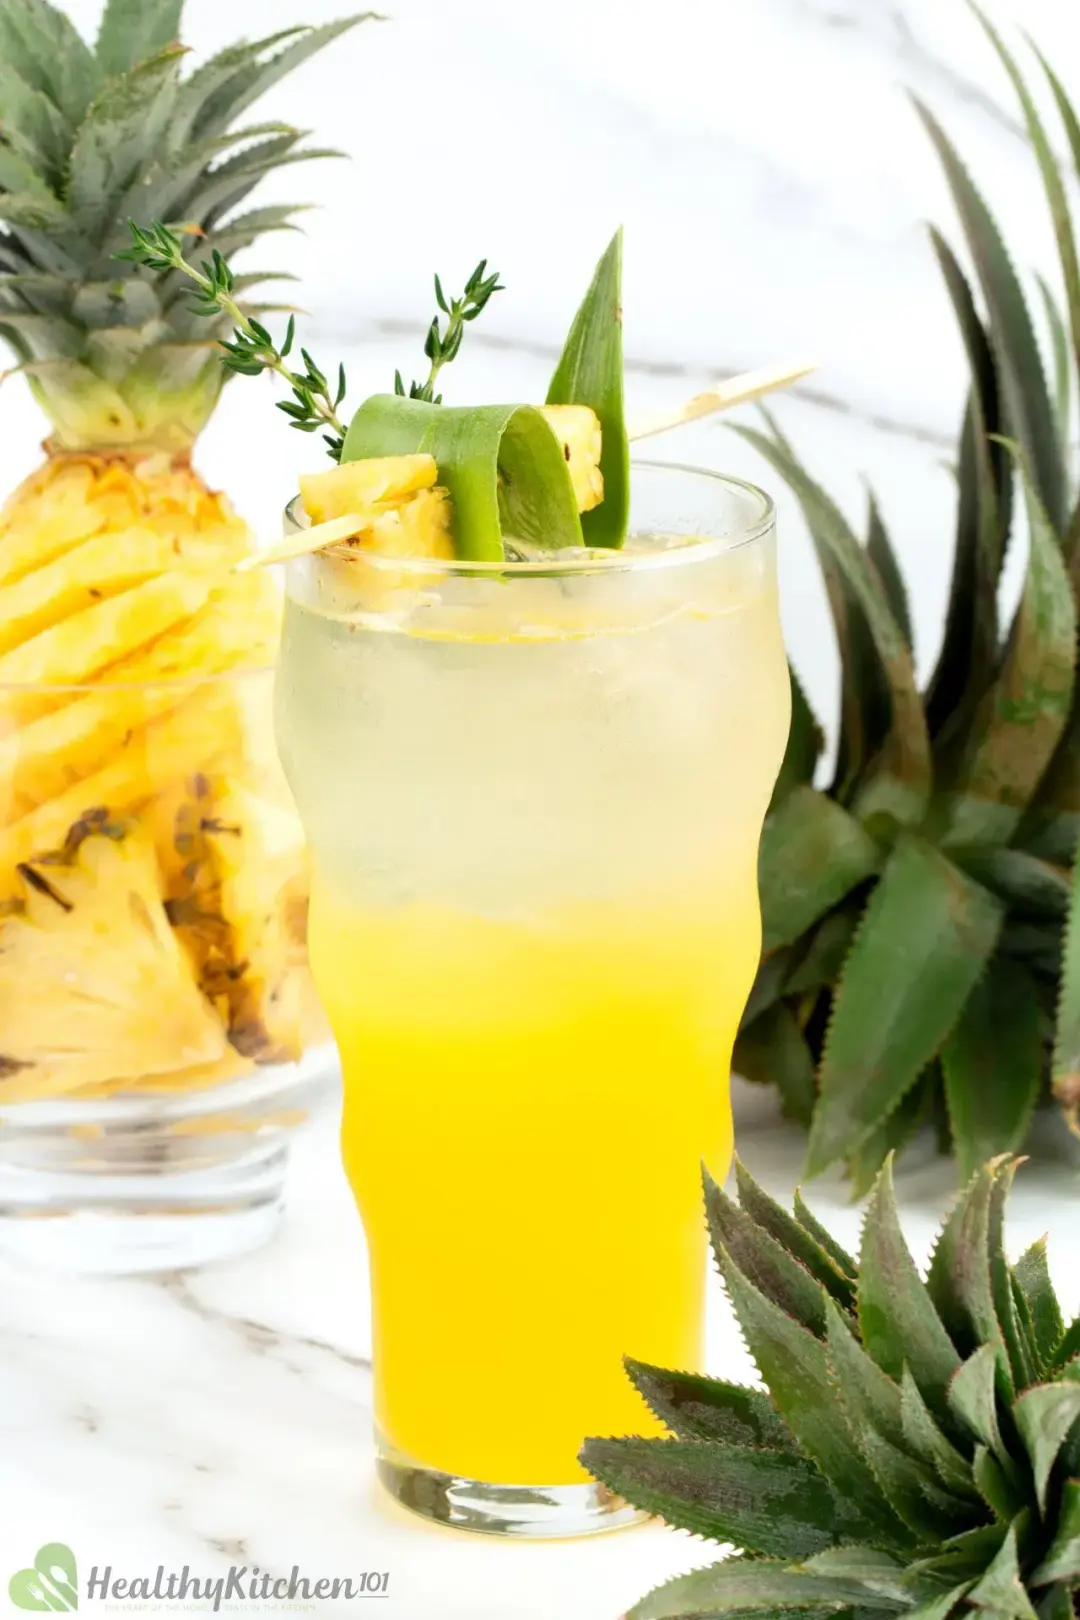 Best Pineapple Juice Recipes